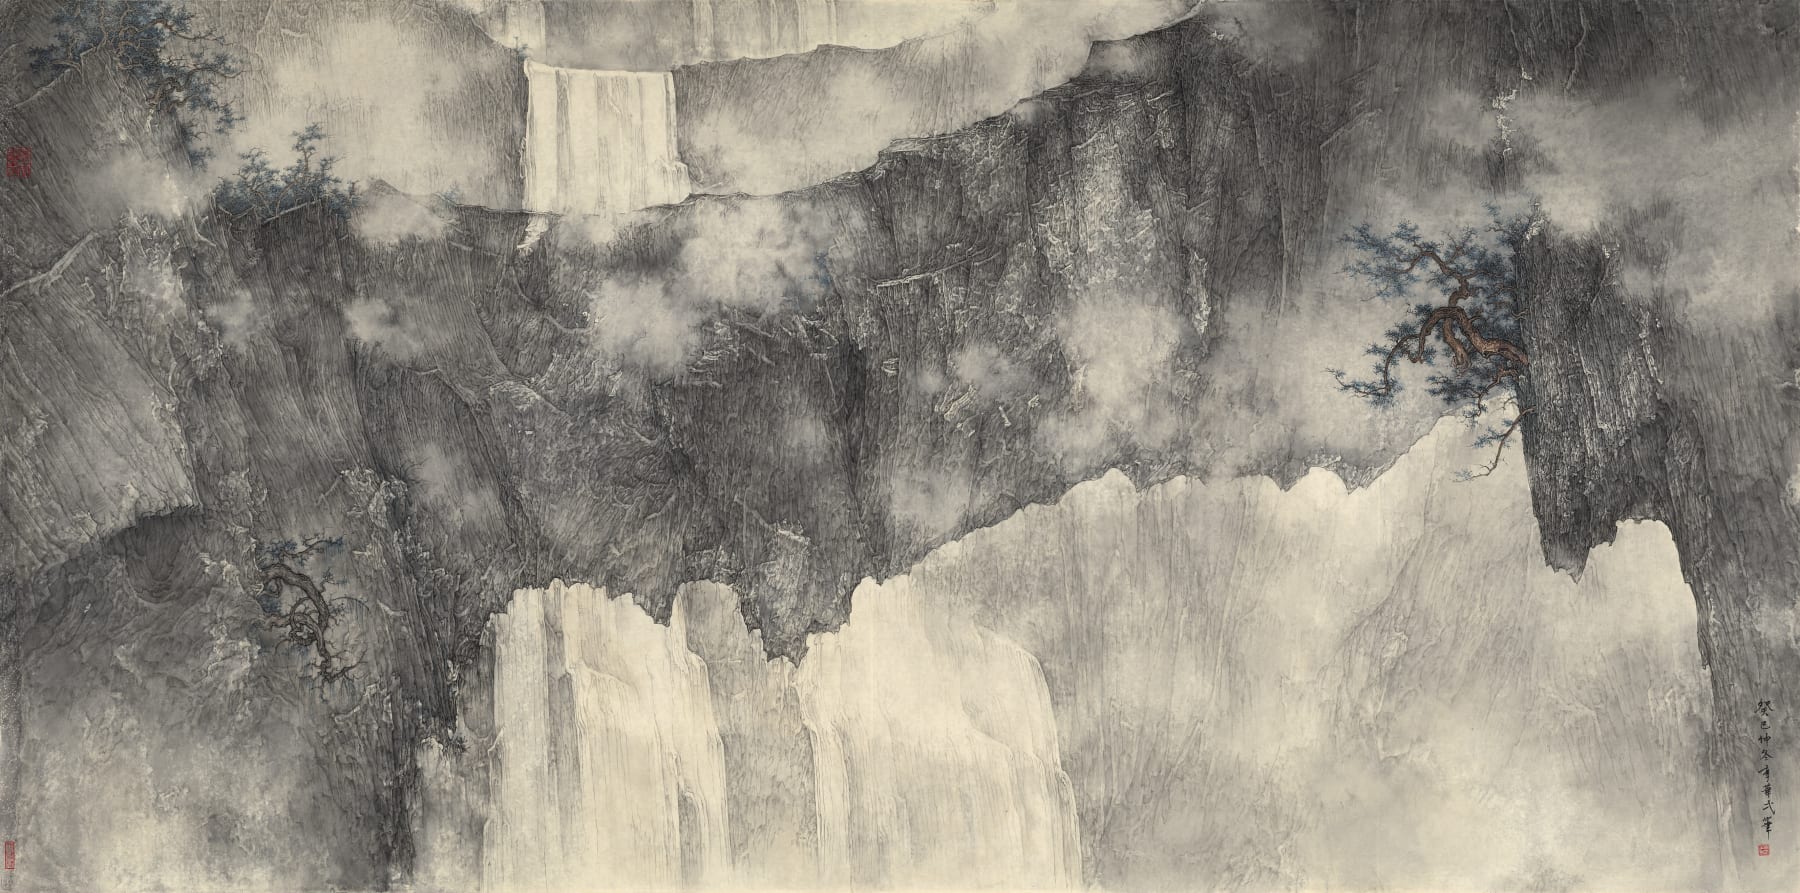 Li Huayi 李華弌, Wandering in the Mountains《橫橋疊翠》, 2013